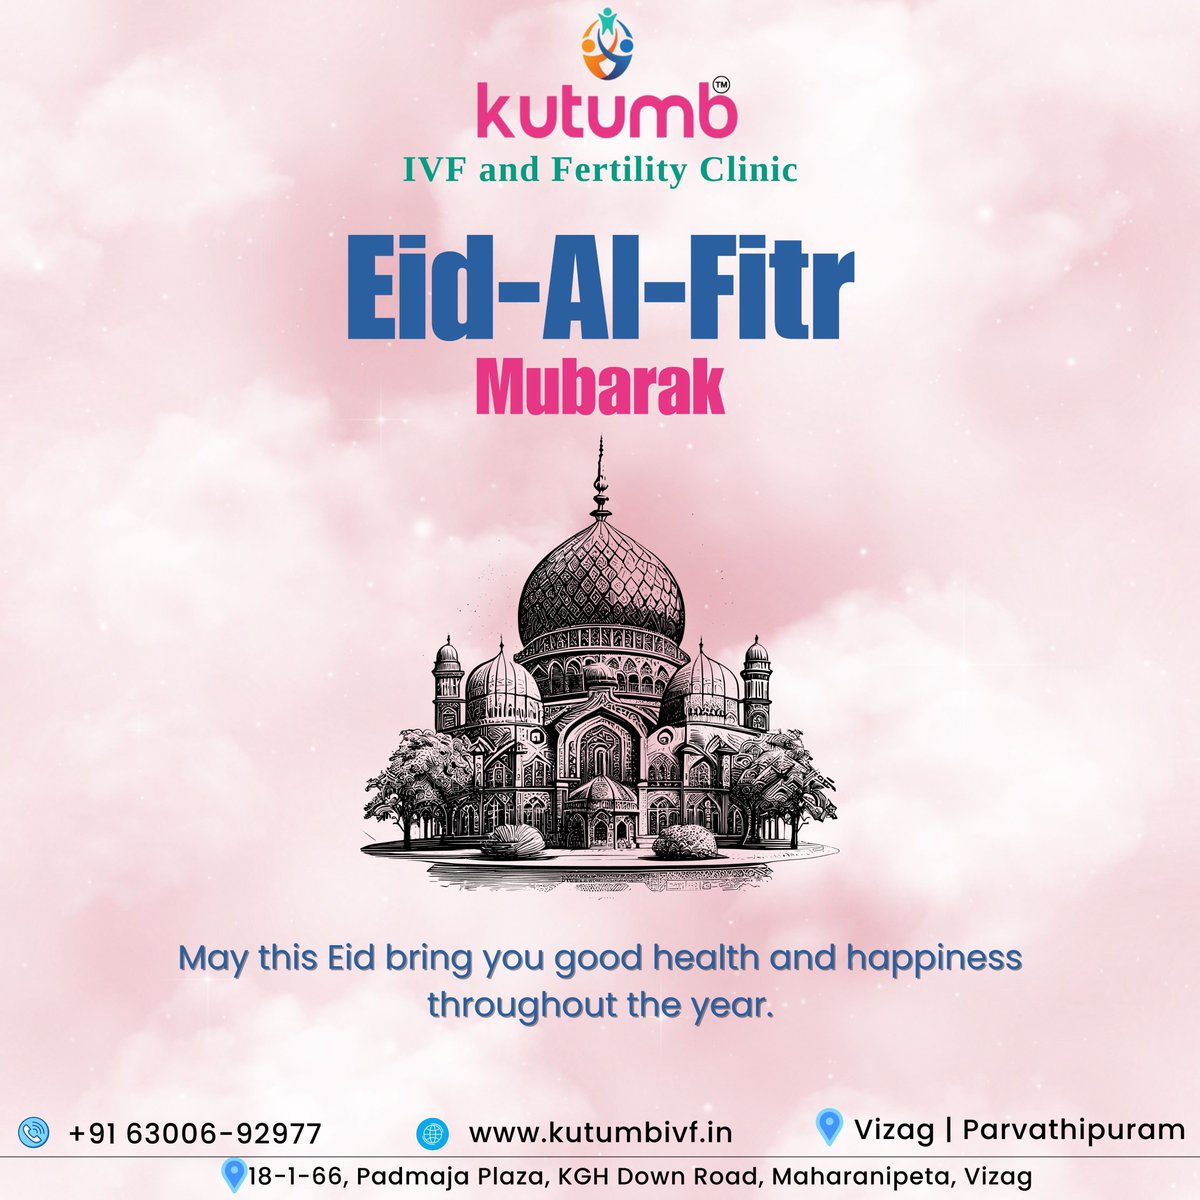 Eid Mubarak! Wishing you abundant health and joy this Eid and always. From all of us at Kutumb IVF, may your celebrations be filled with love and blessings.
#EidAlFitr #eid #eidmubarak #kutumb #vizagivf #visakhapatnam #kutumbivf #vizag